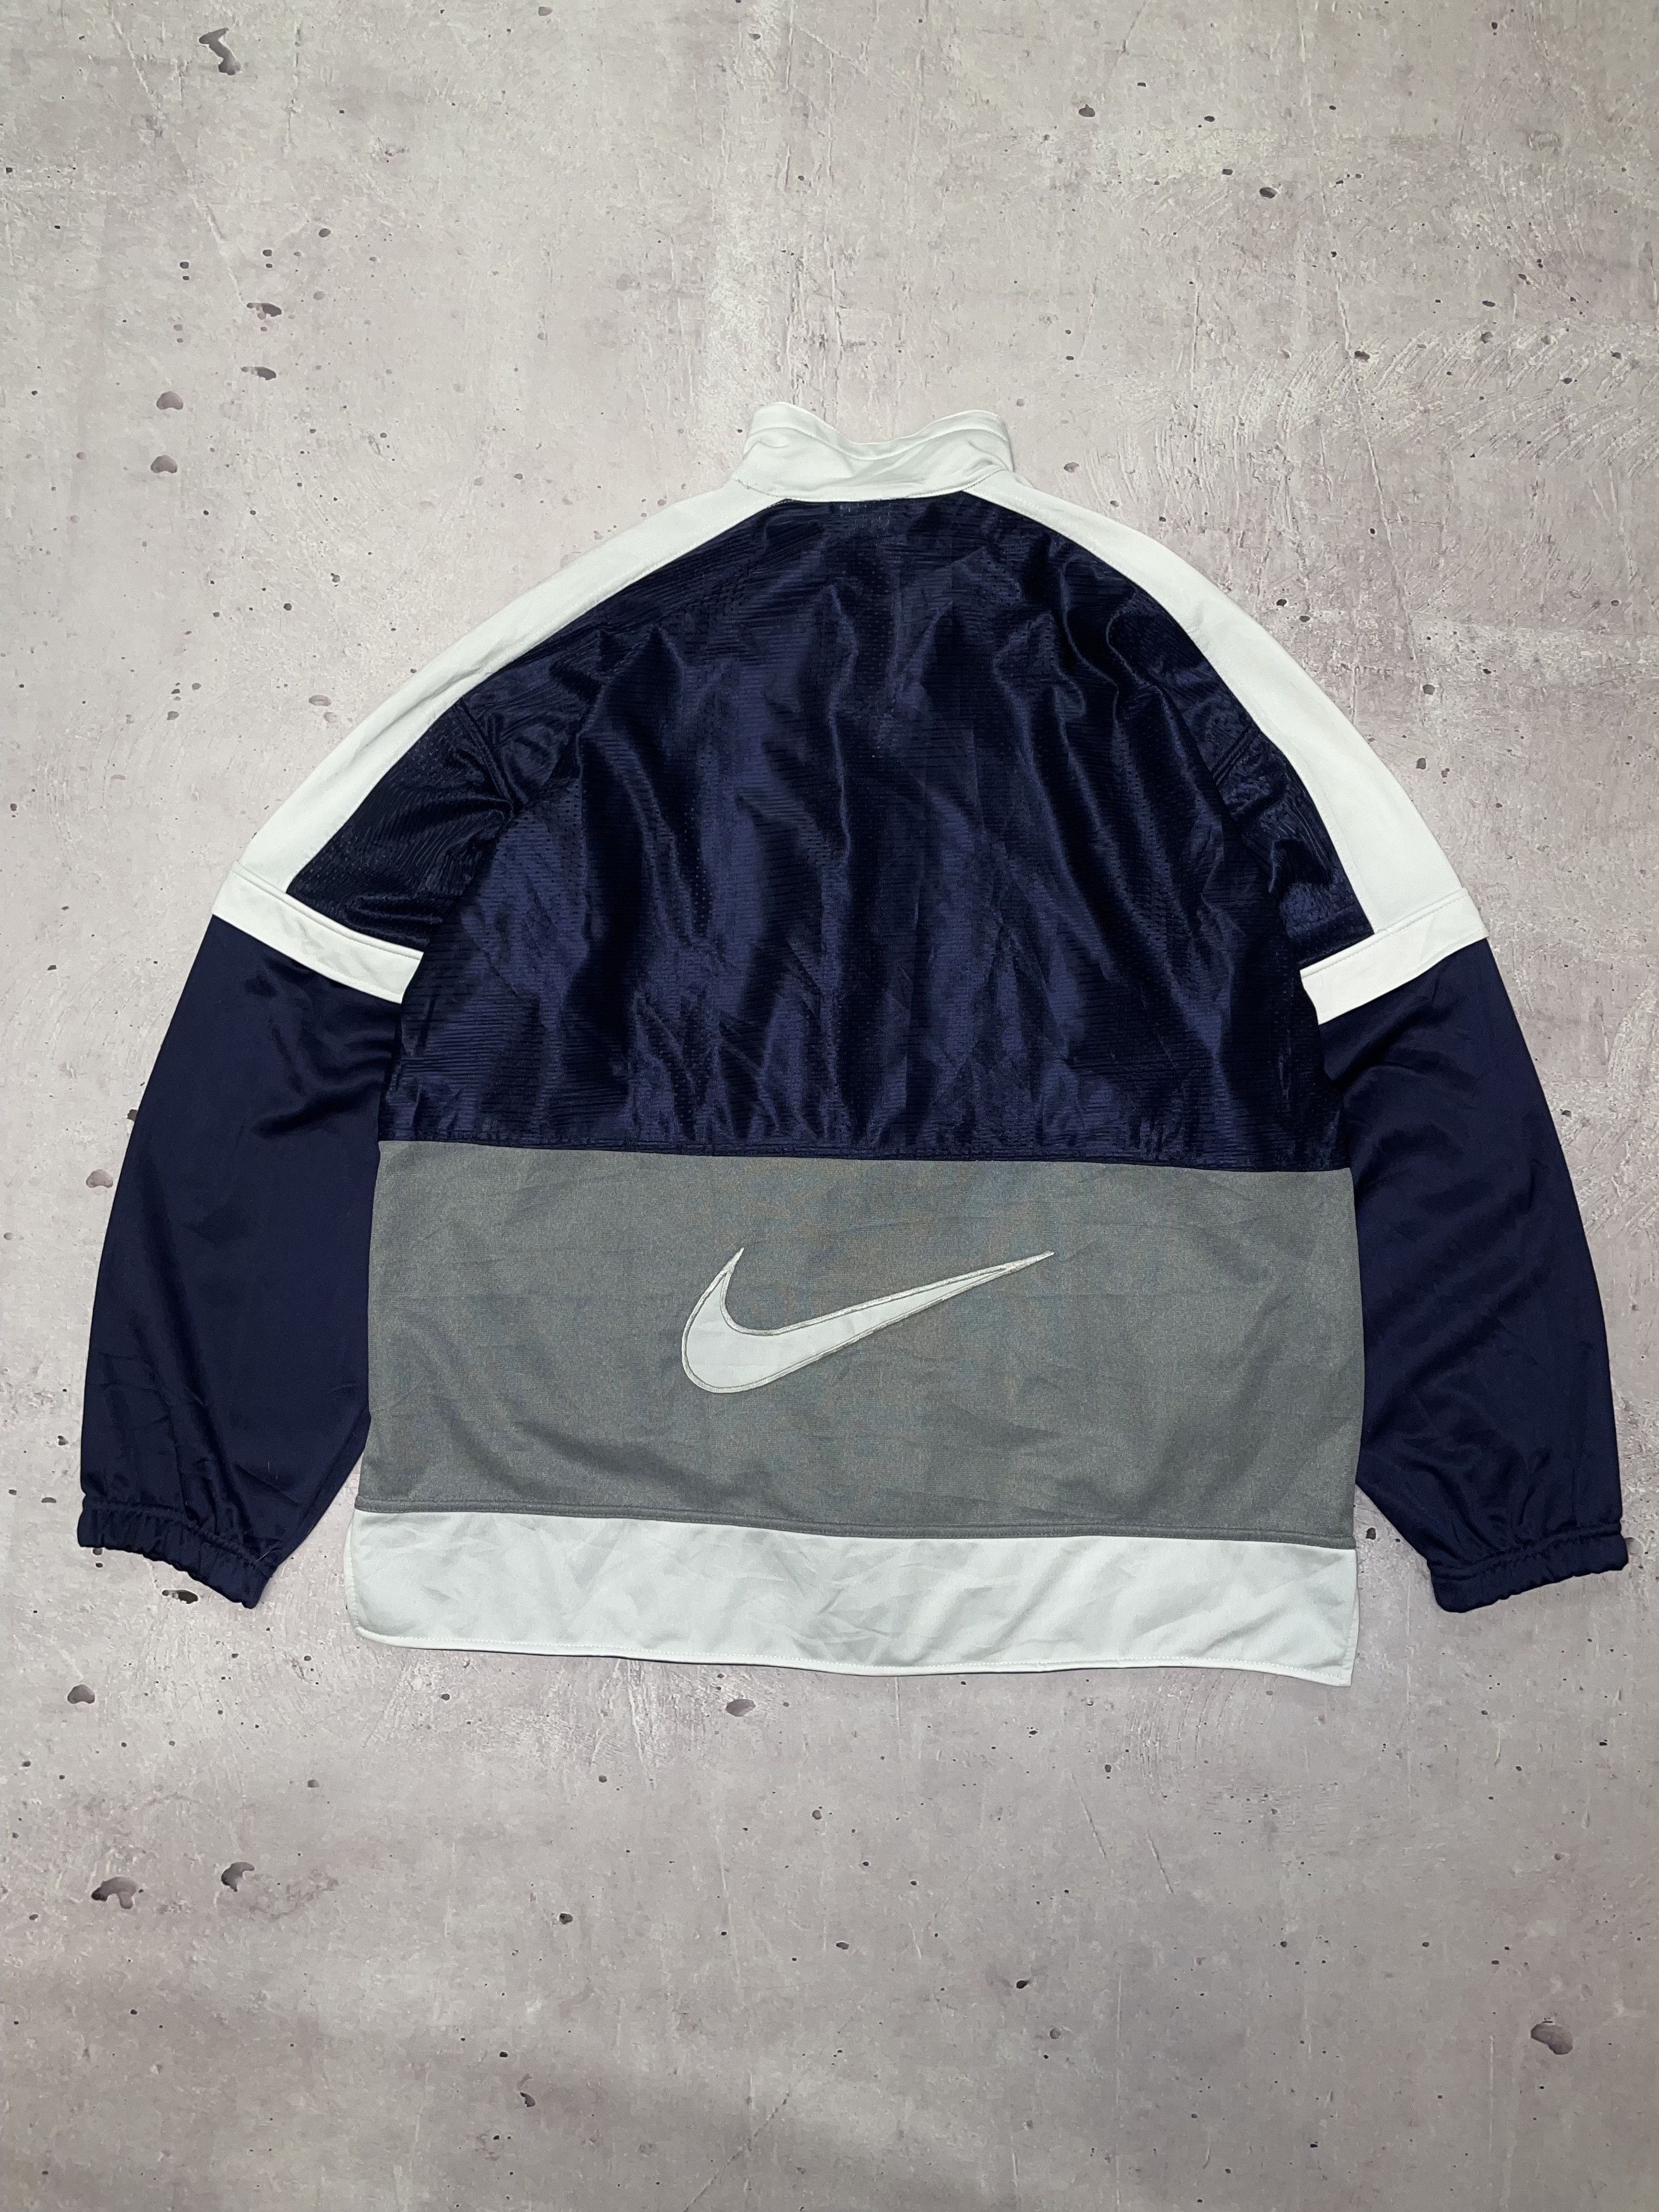 Nike Vintage Nike Big Logo Track Top Jacket Made in Usa | Grailed